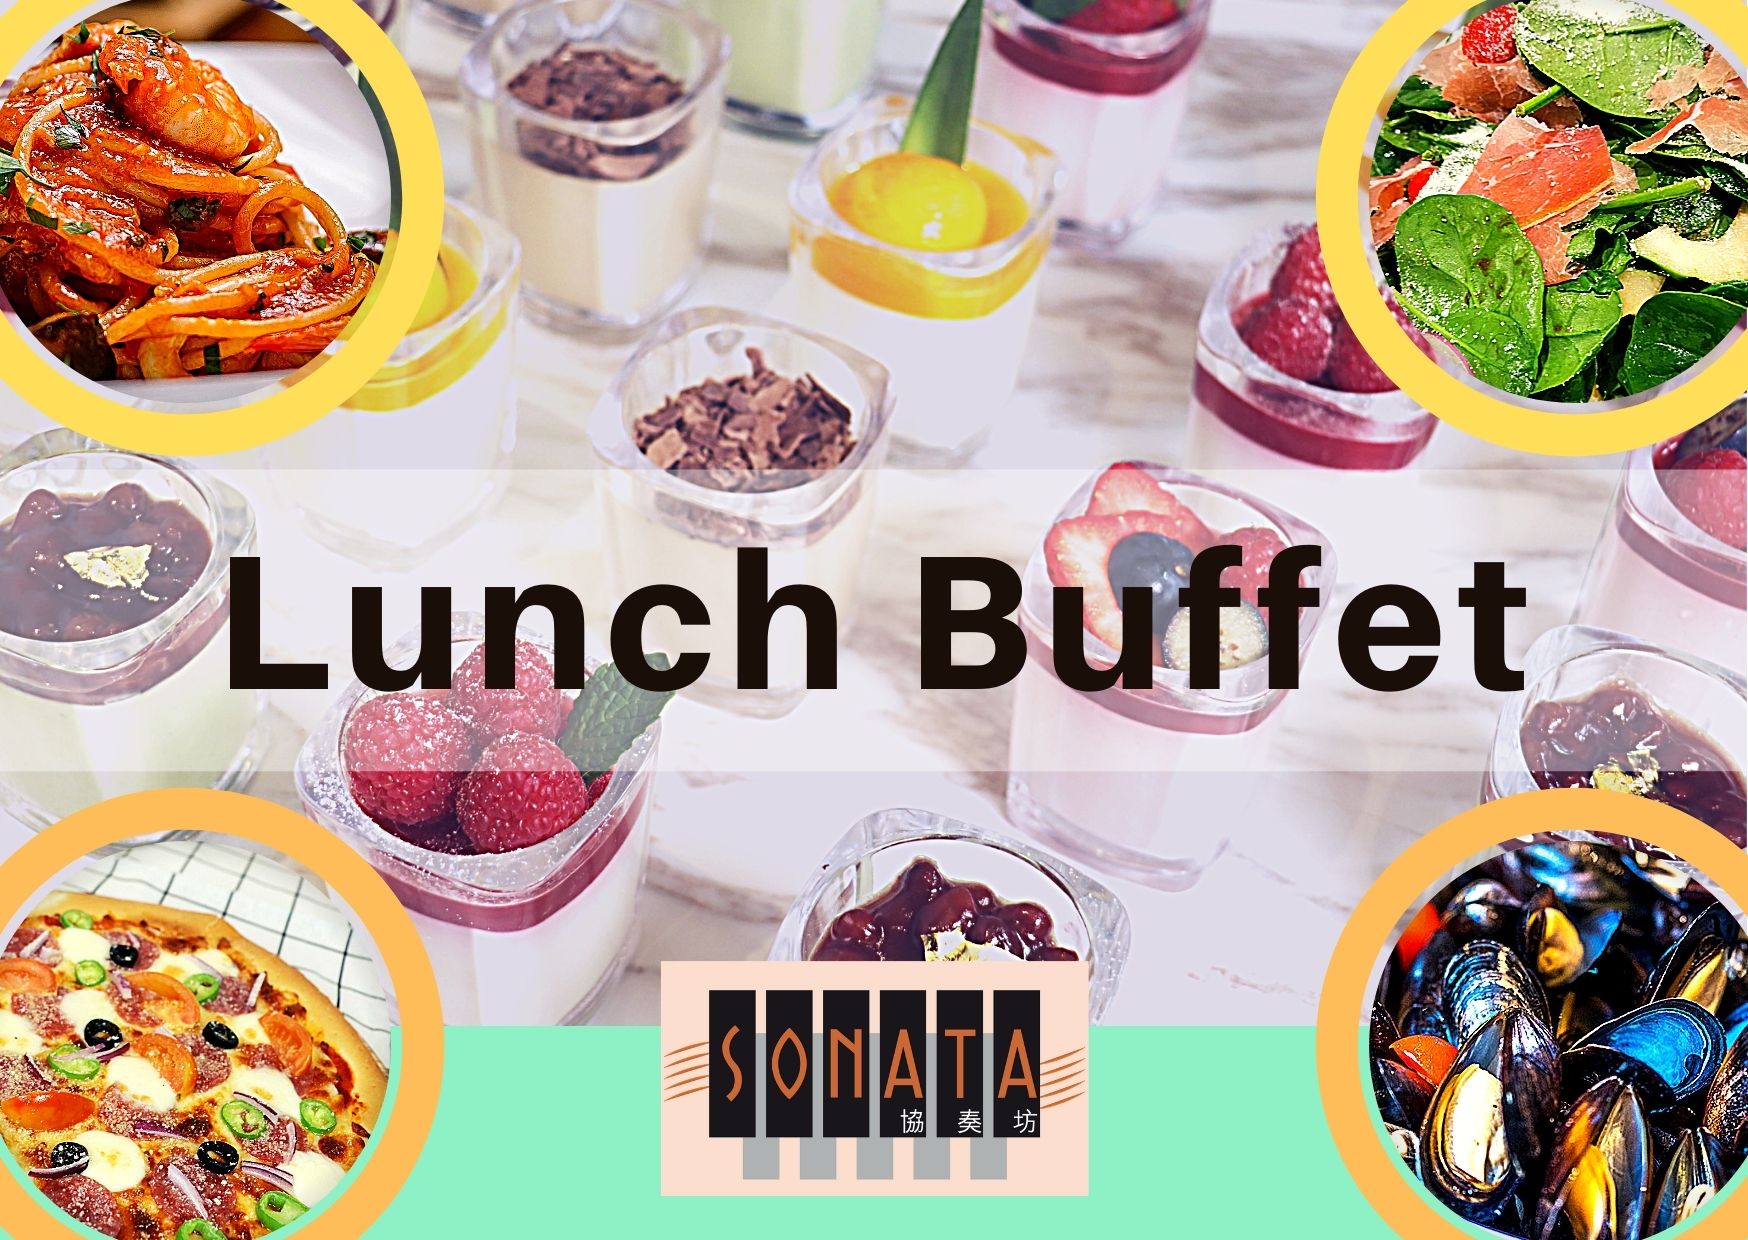 Sonata Buffet Lunch Promotion.